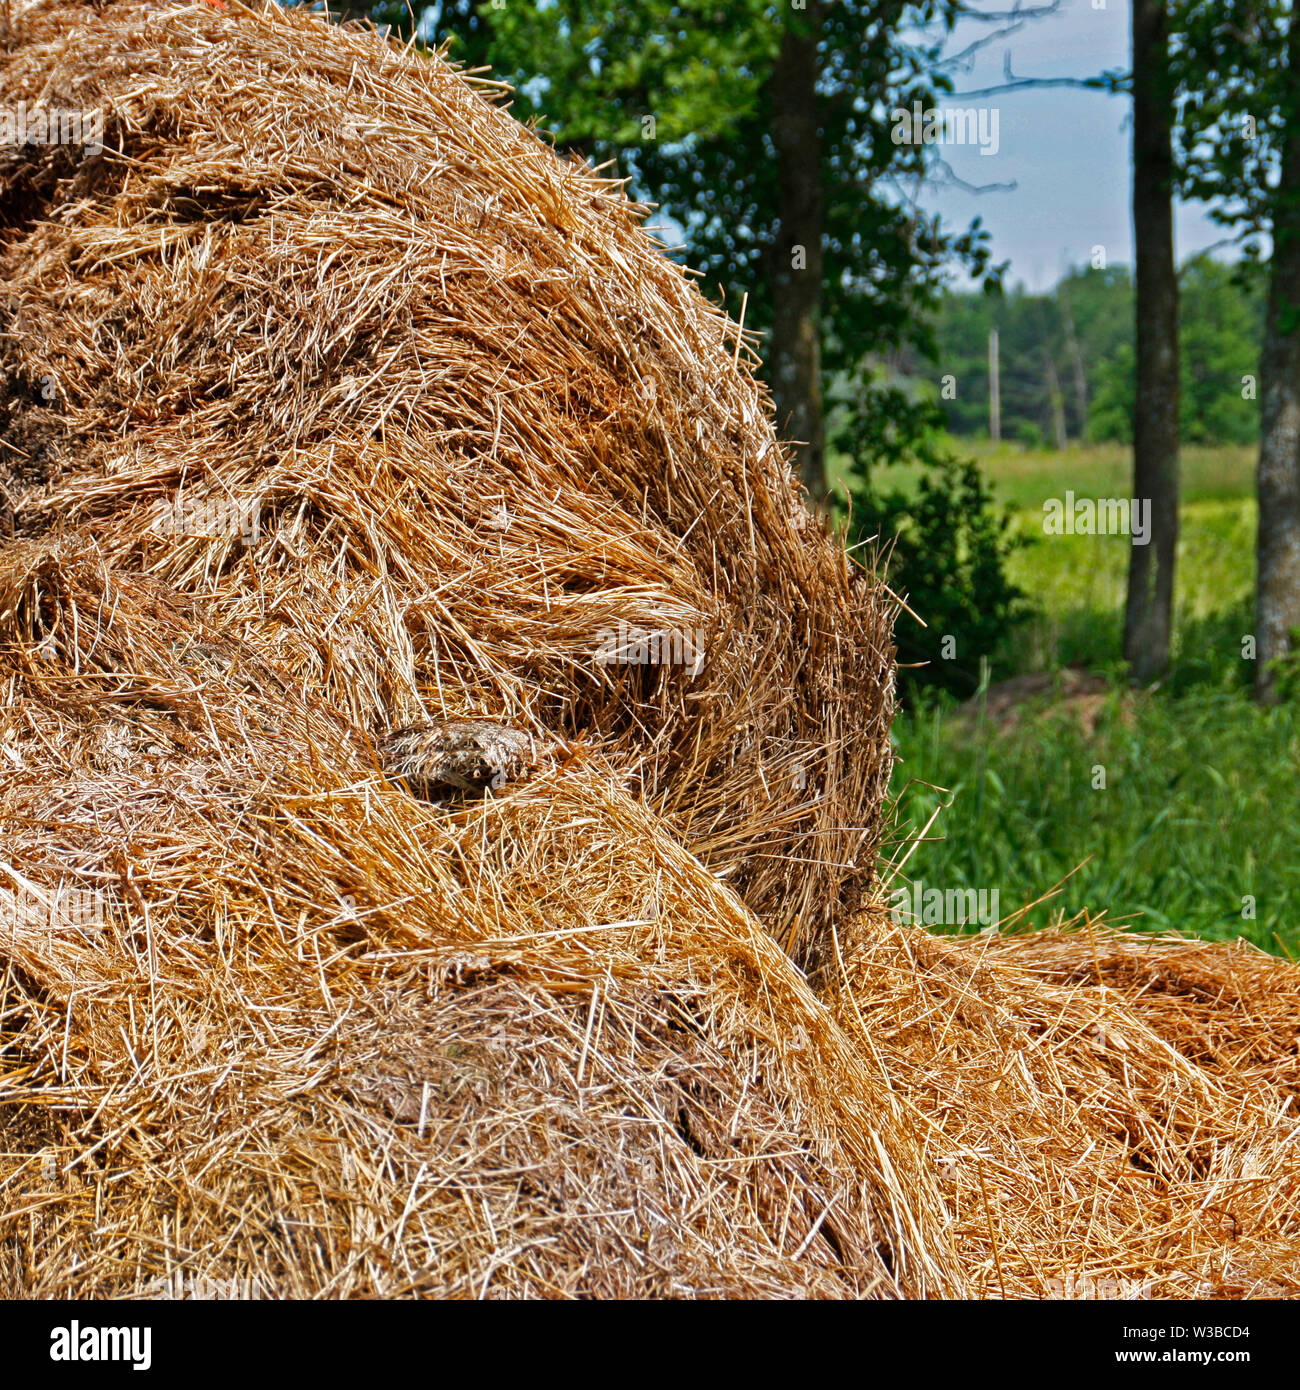 Hays in Farm Stock Photo